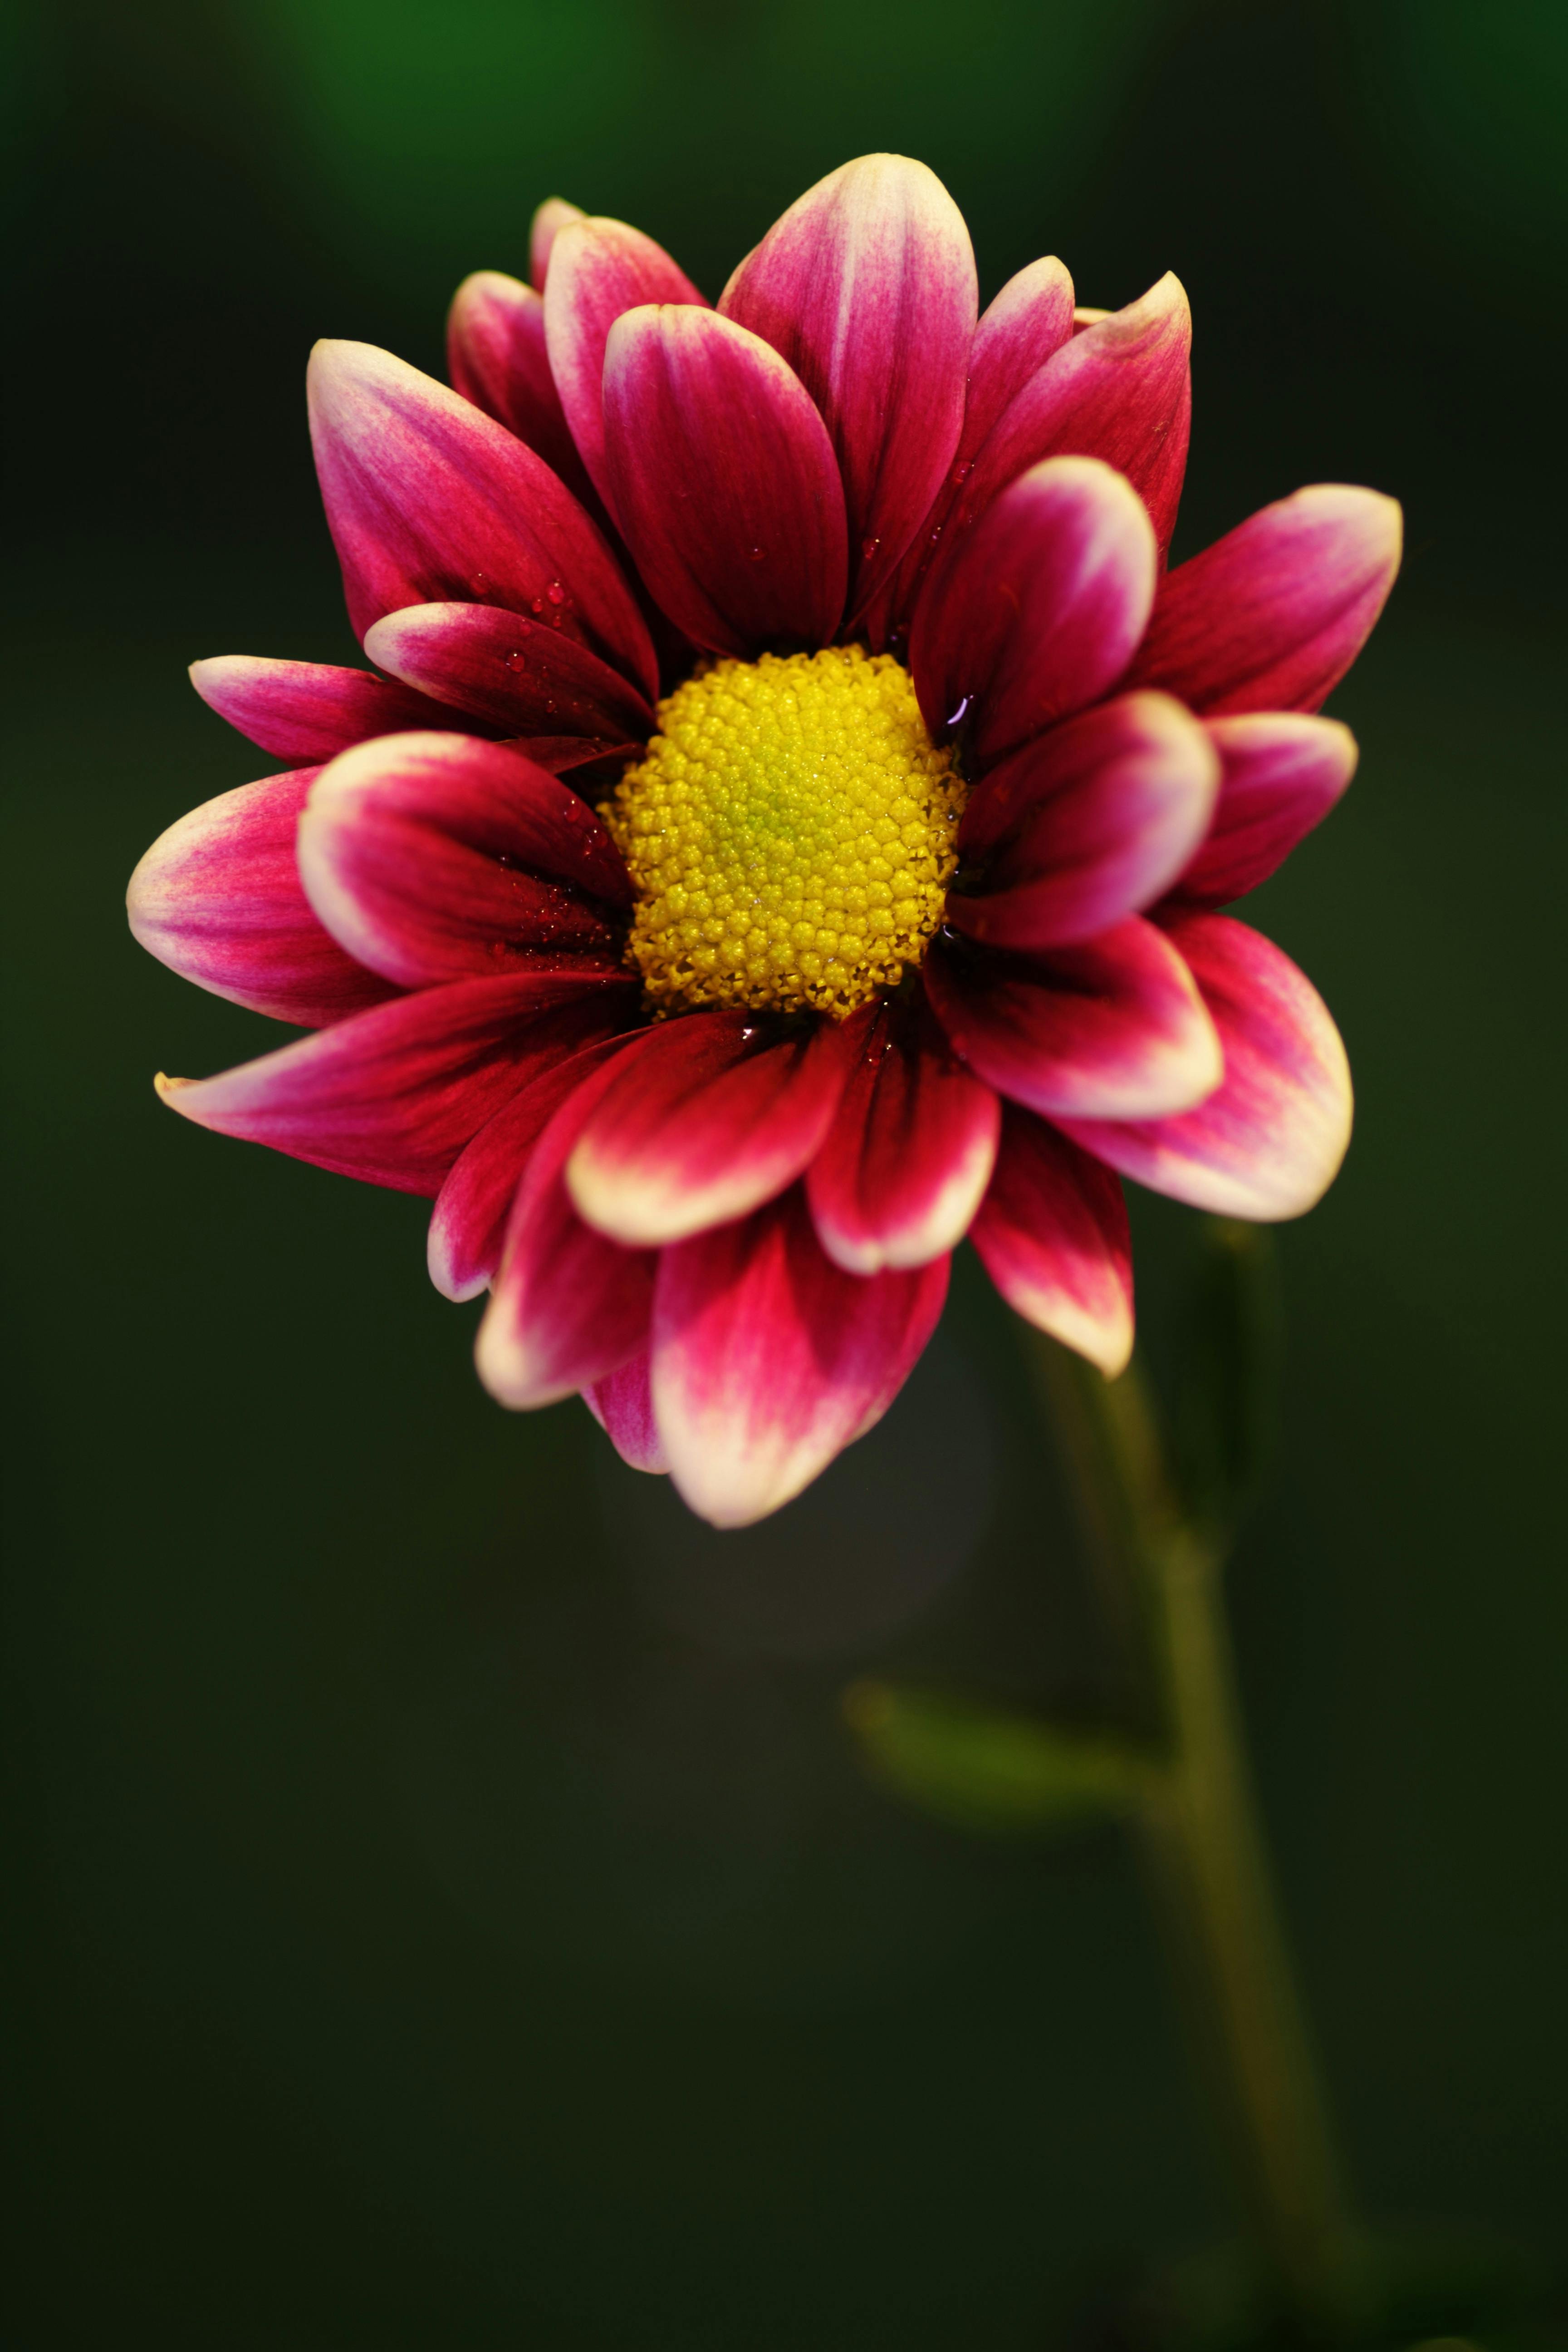 1000+ Beautiful Single Flower Photos · Pexels · Free Stock Photos